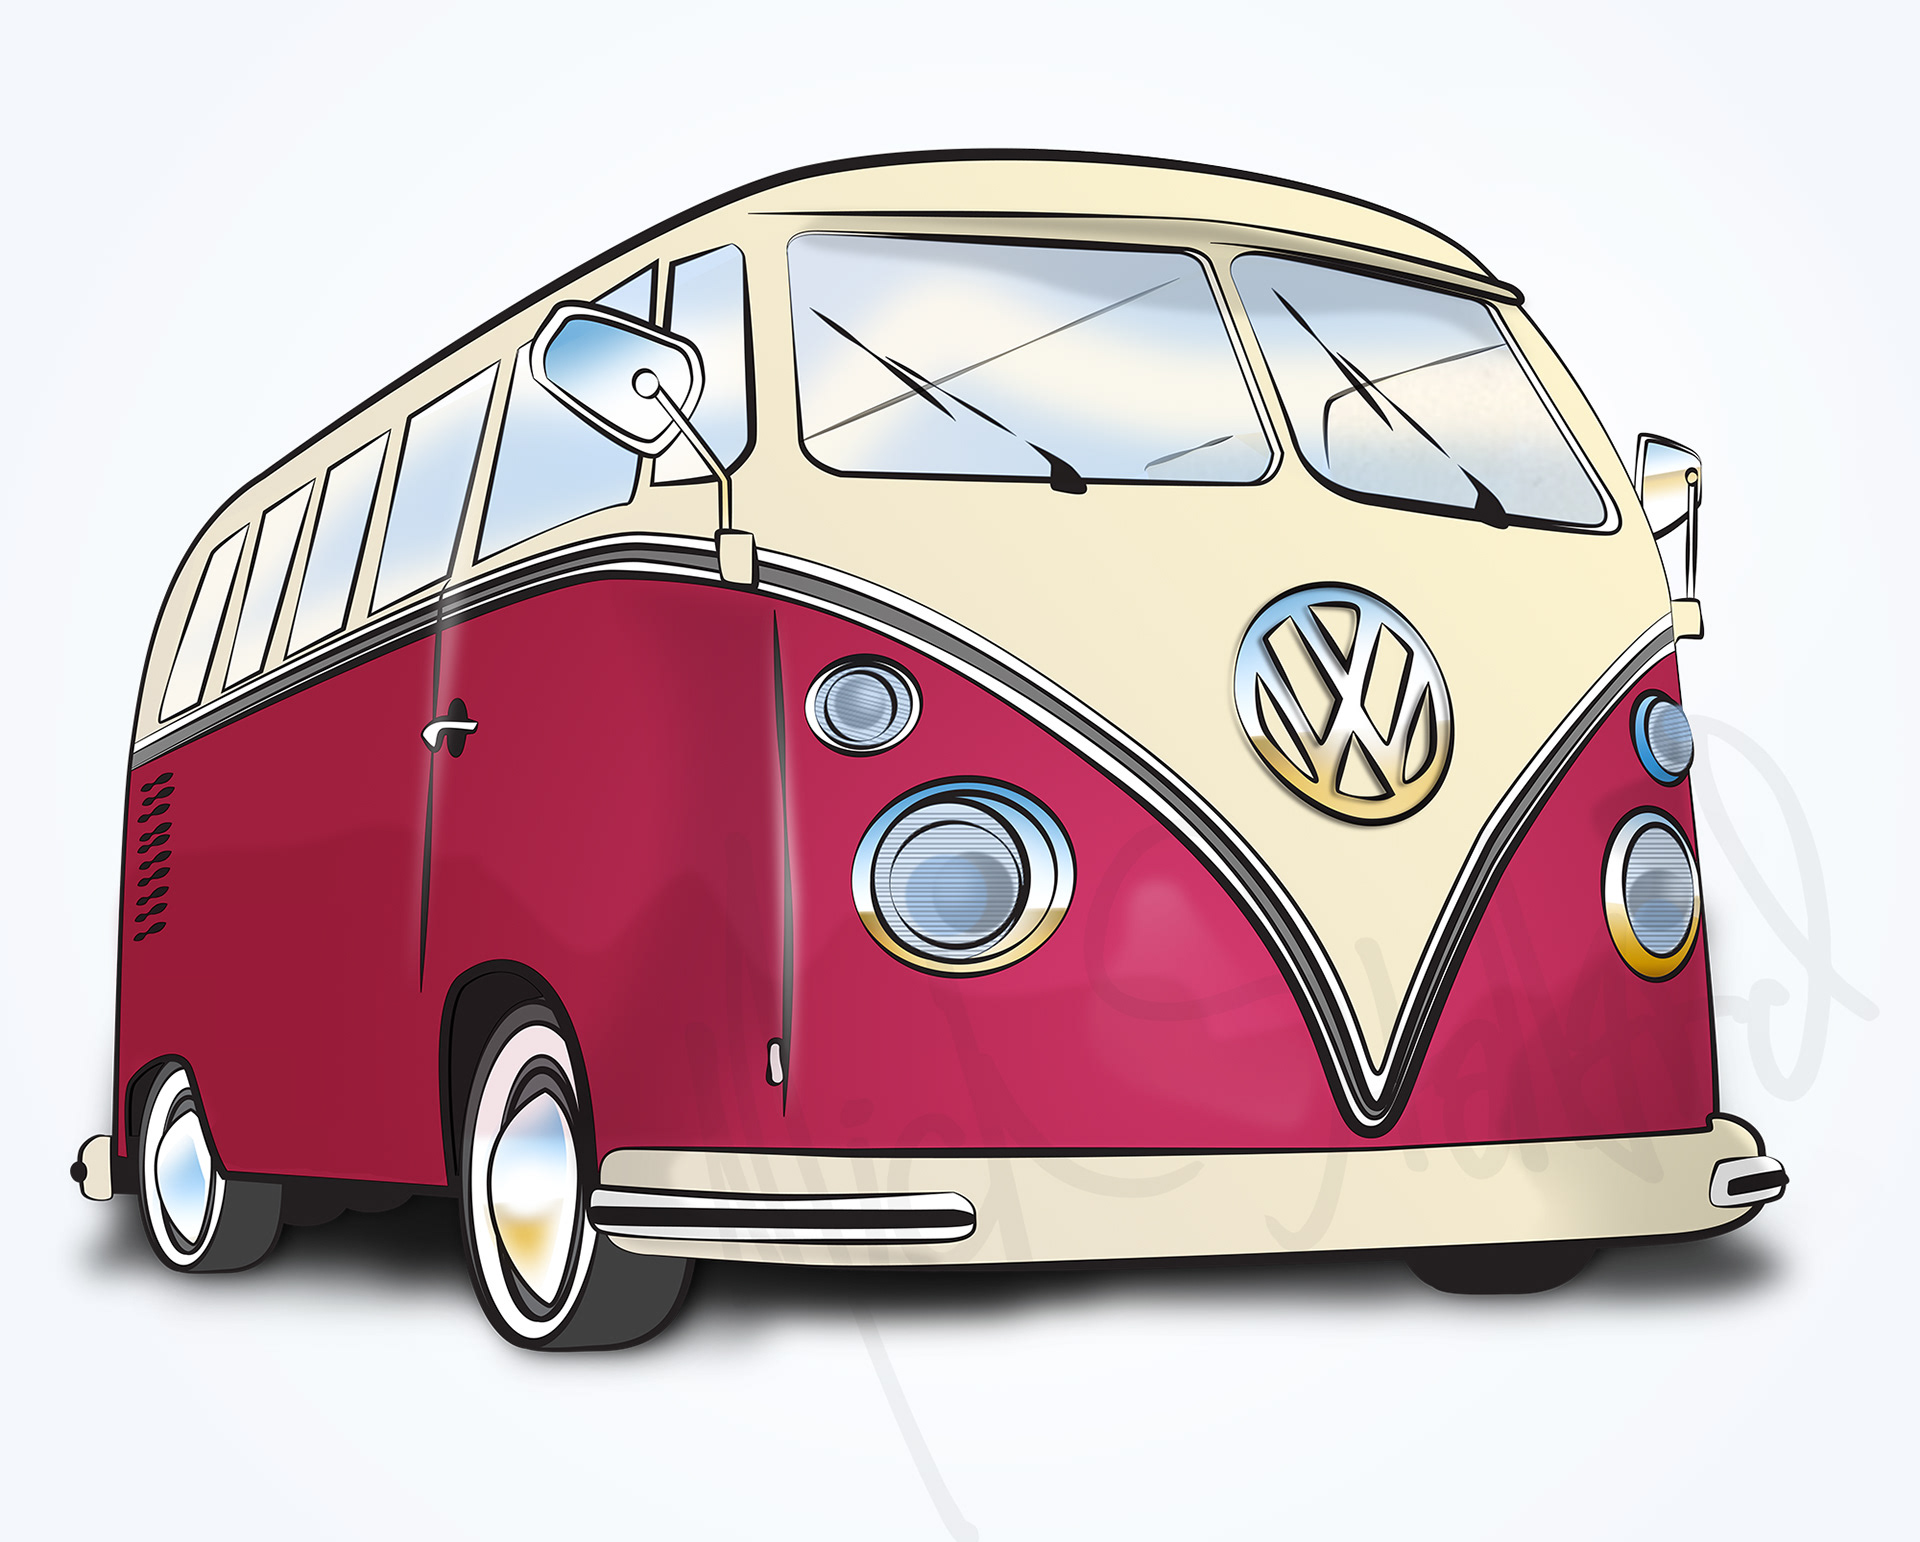 Michael Stallard Illustration - VW Camper Van